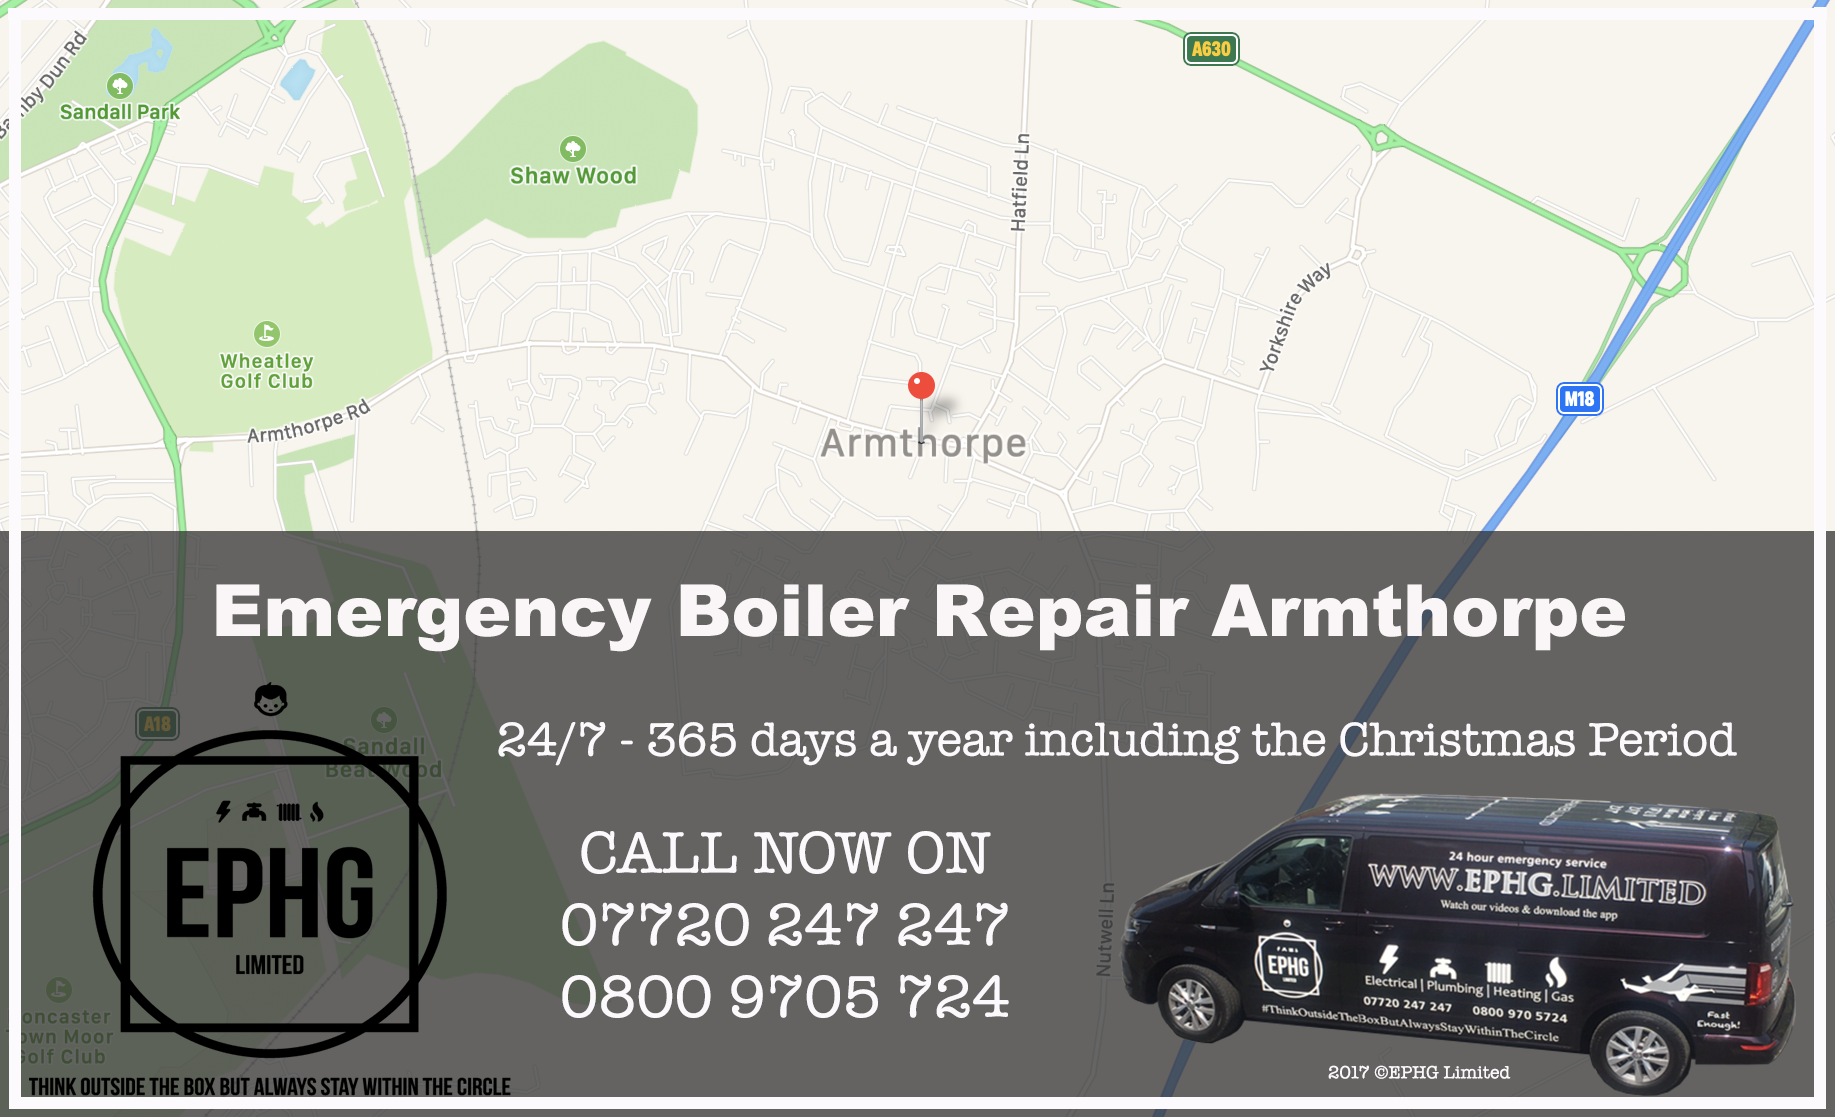 24 Hour Emergency Boiler Repair Armthorpe